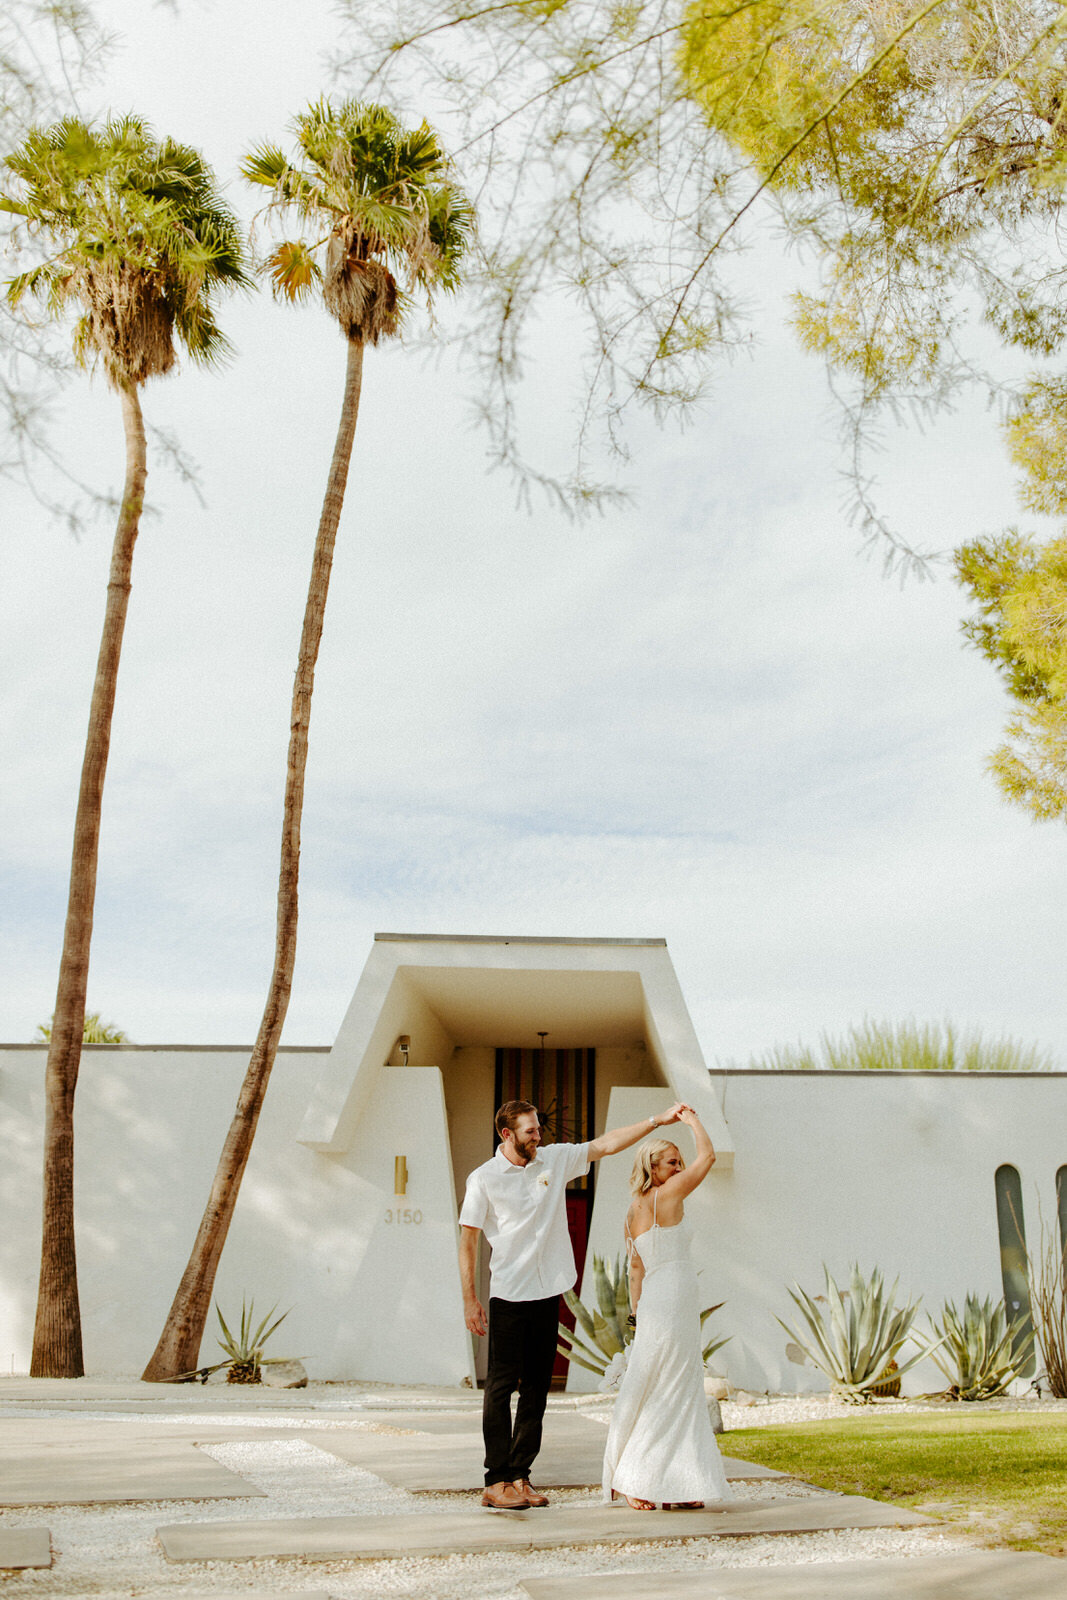 Brianna-Broyles-Photography-COVID-Backyard-Wedding-Palm-Springs-Portraits-13.jpg